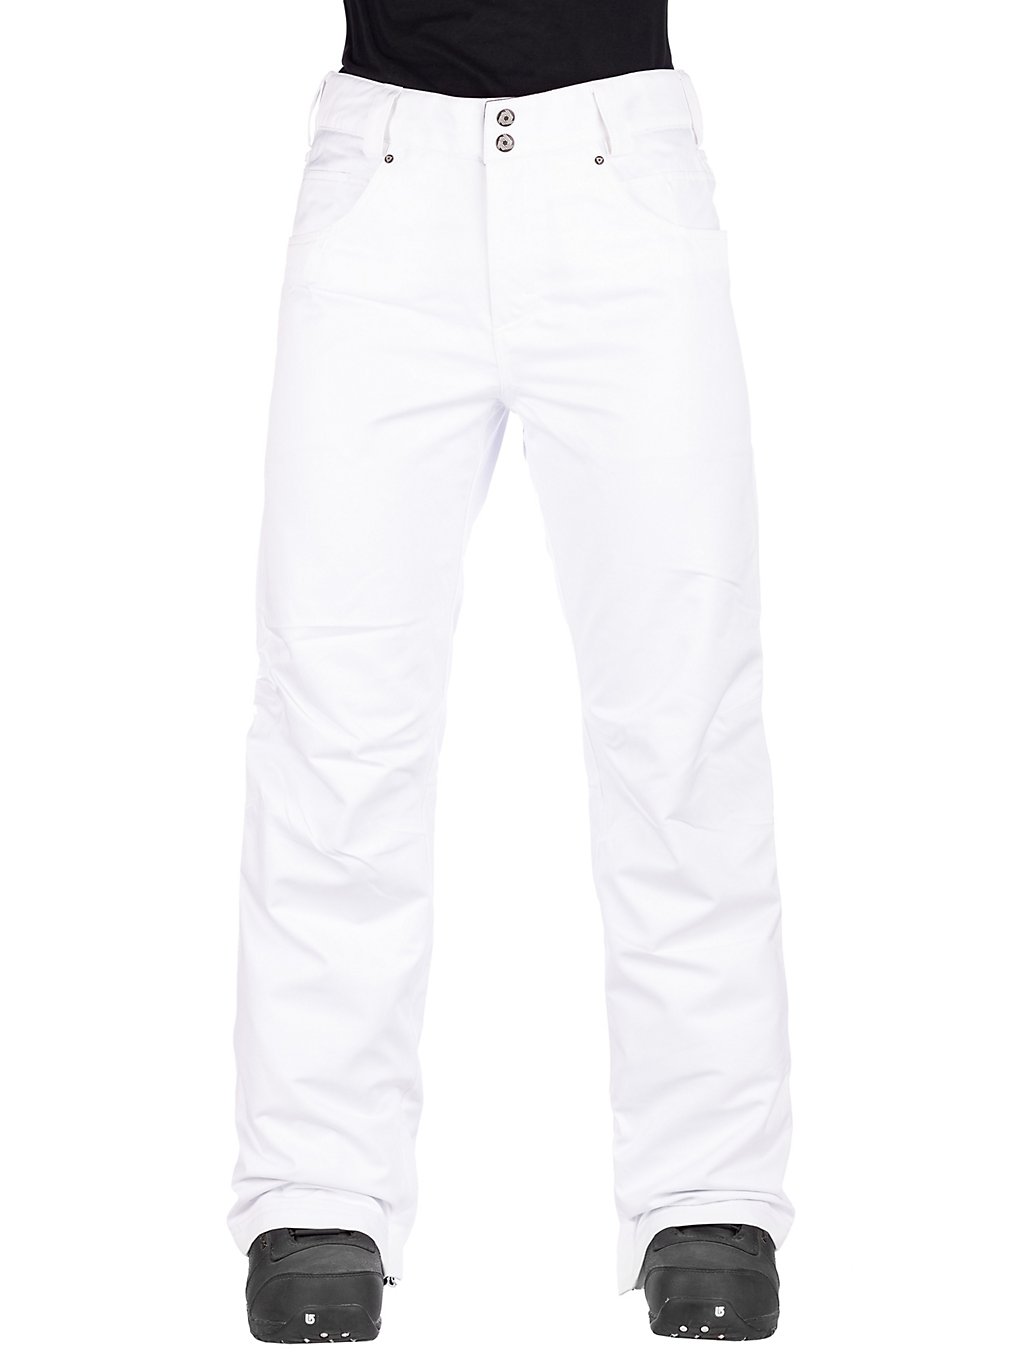 Aperture Crystaline Pants white